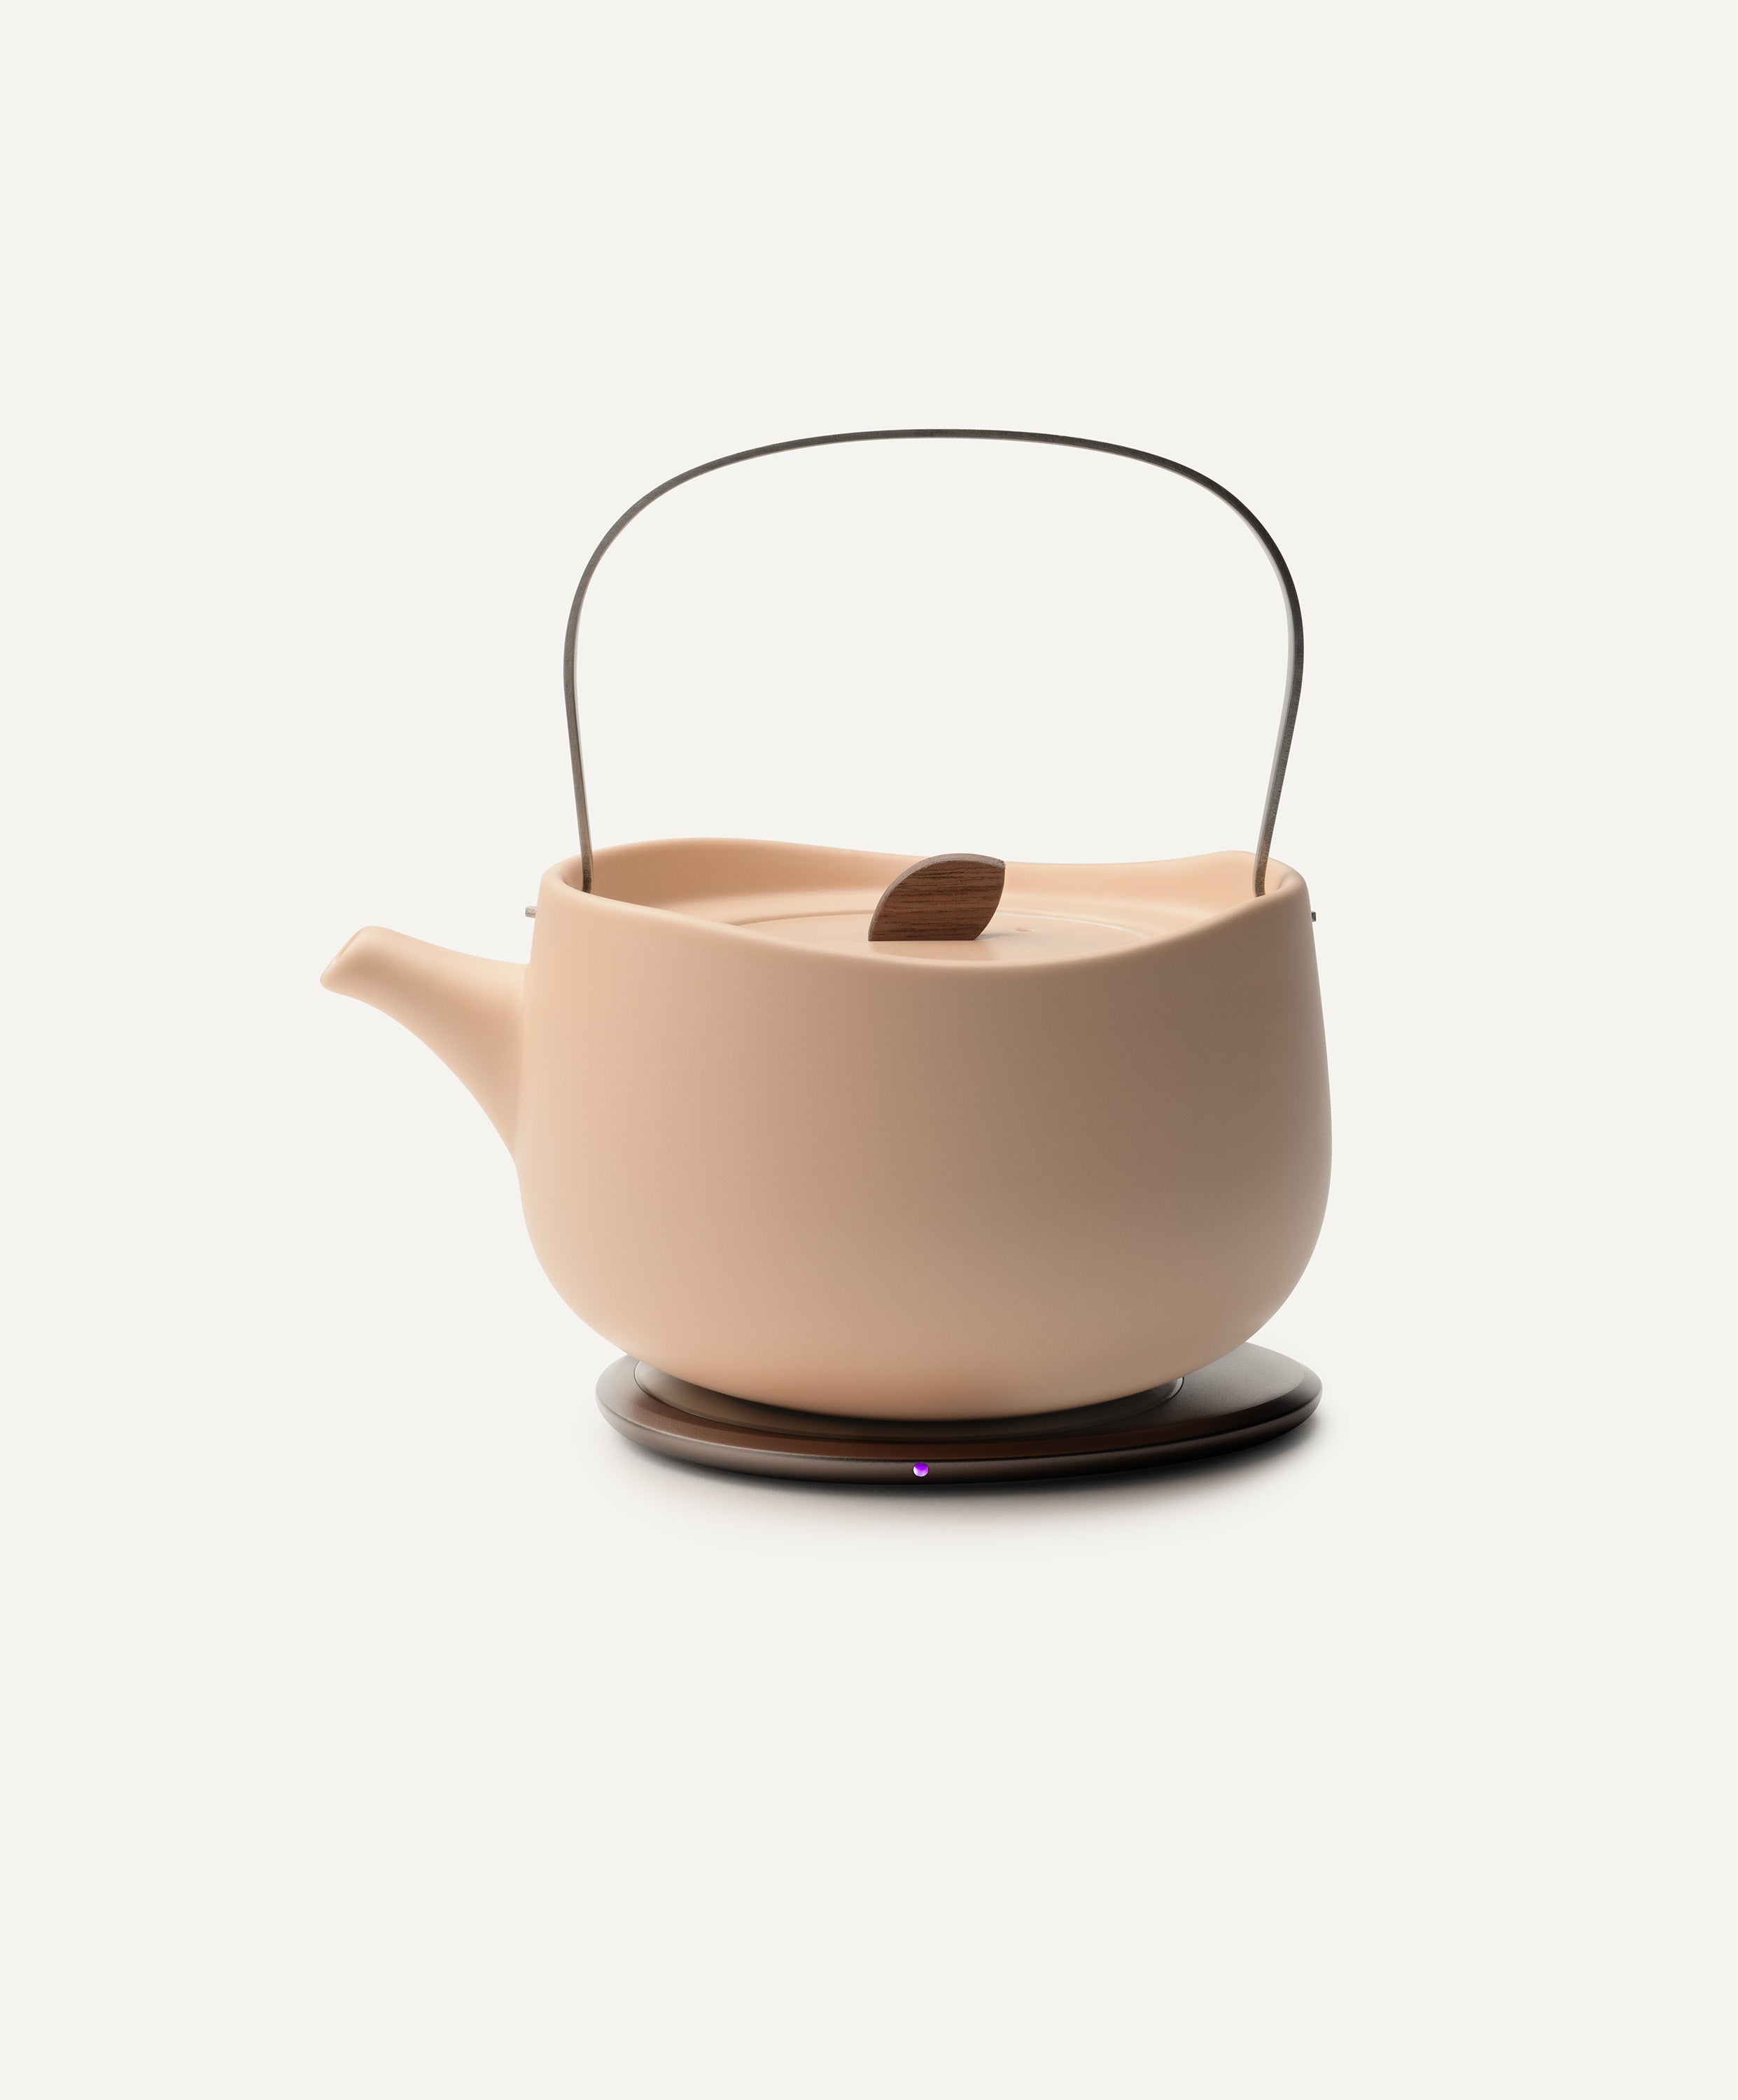 Leiph Self-heating Teapot Set - Rosy Apricot